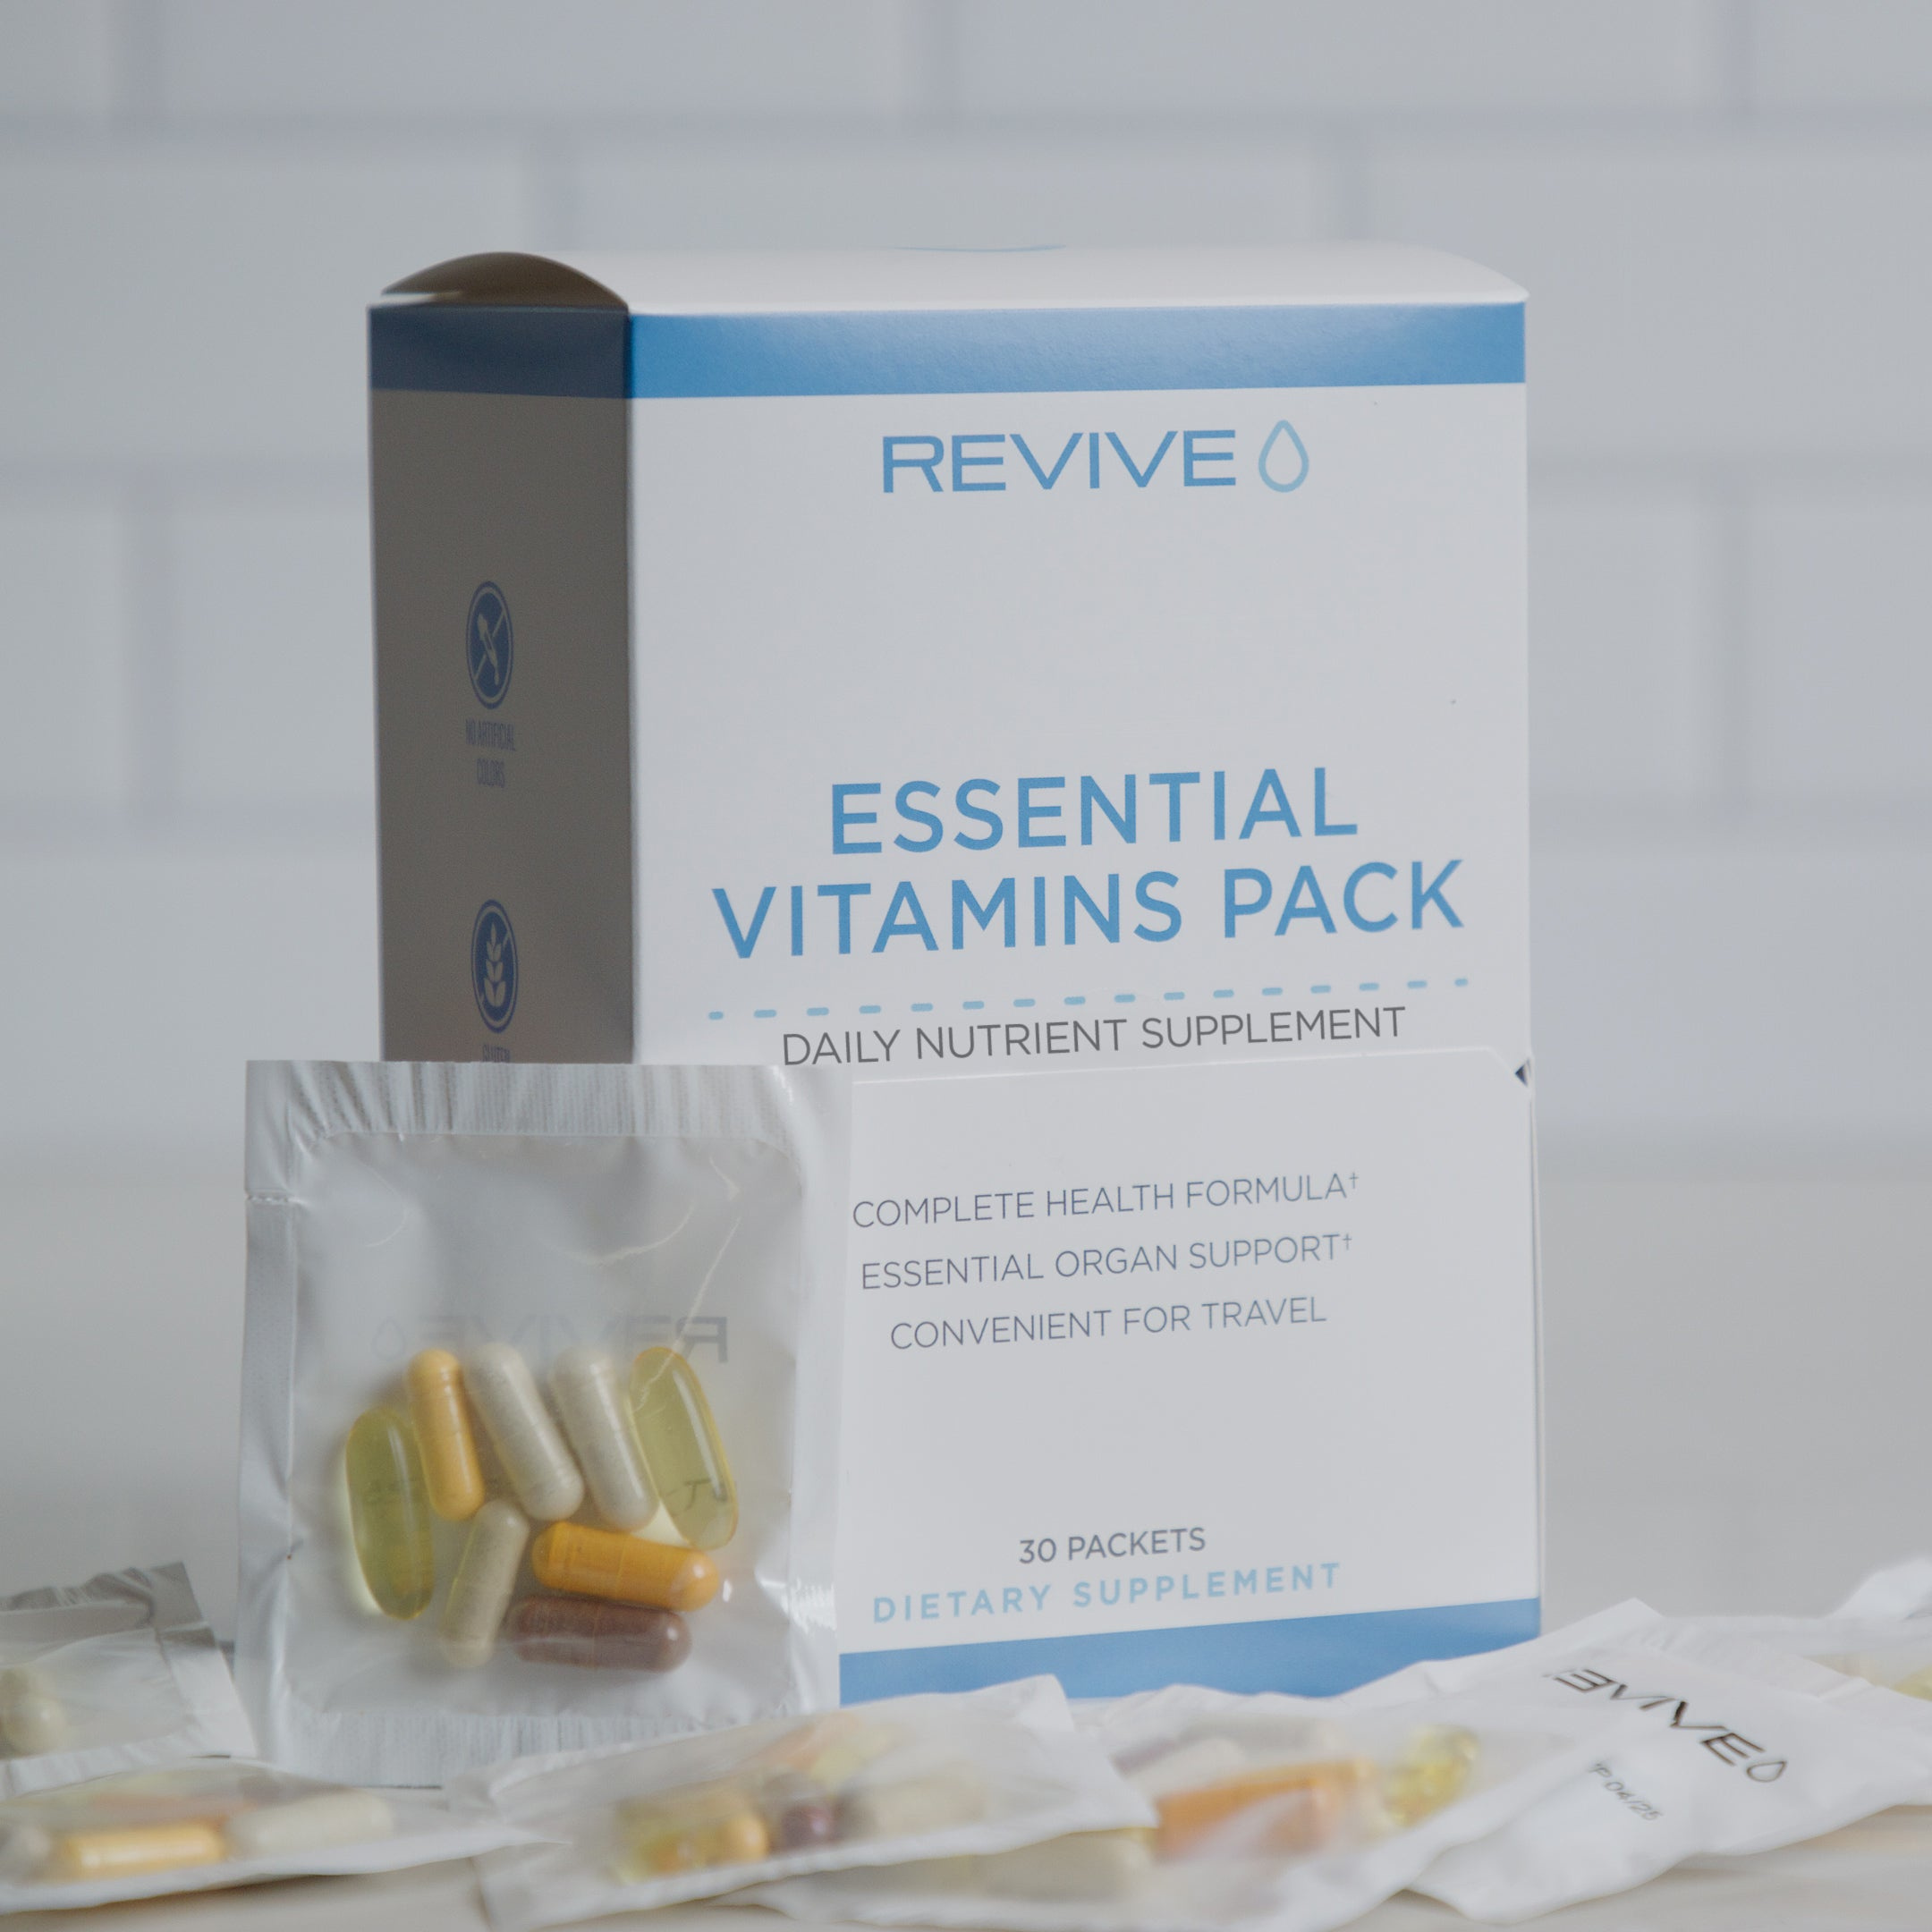 Revive MD Essential Vitamins Pack